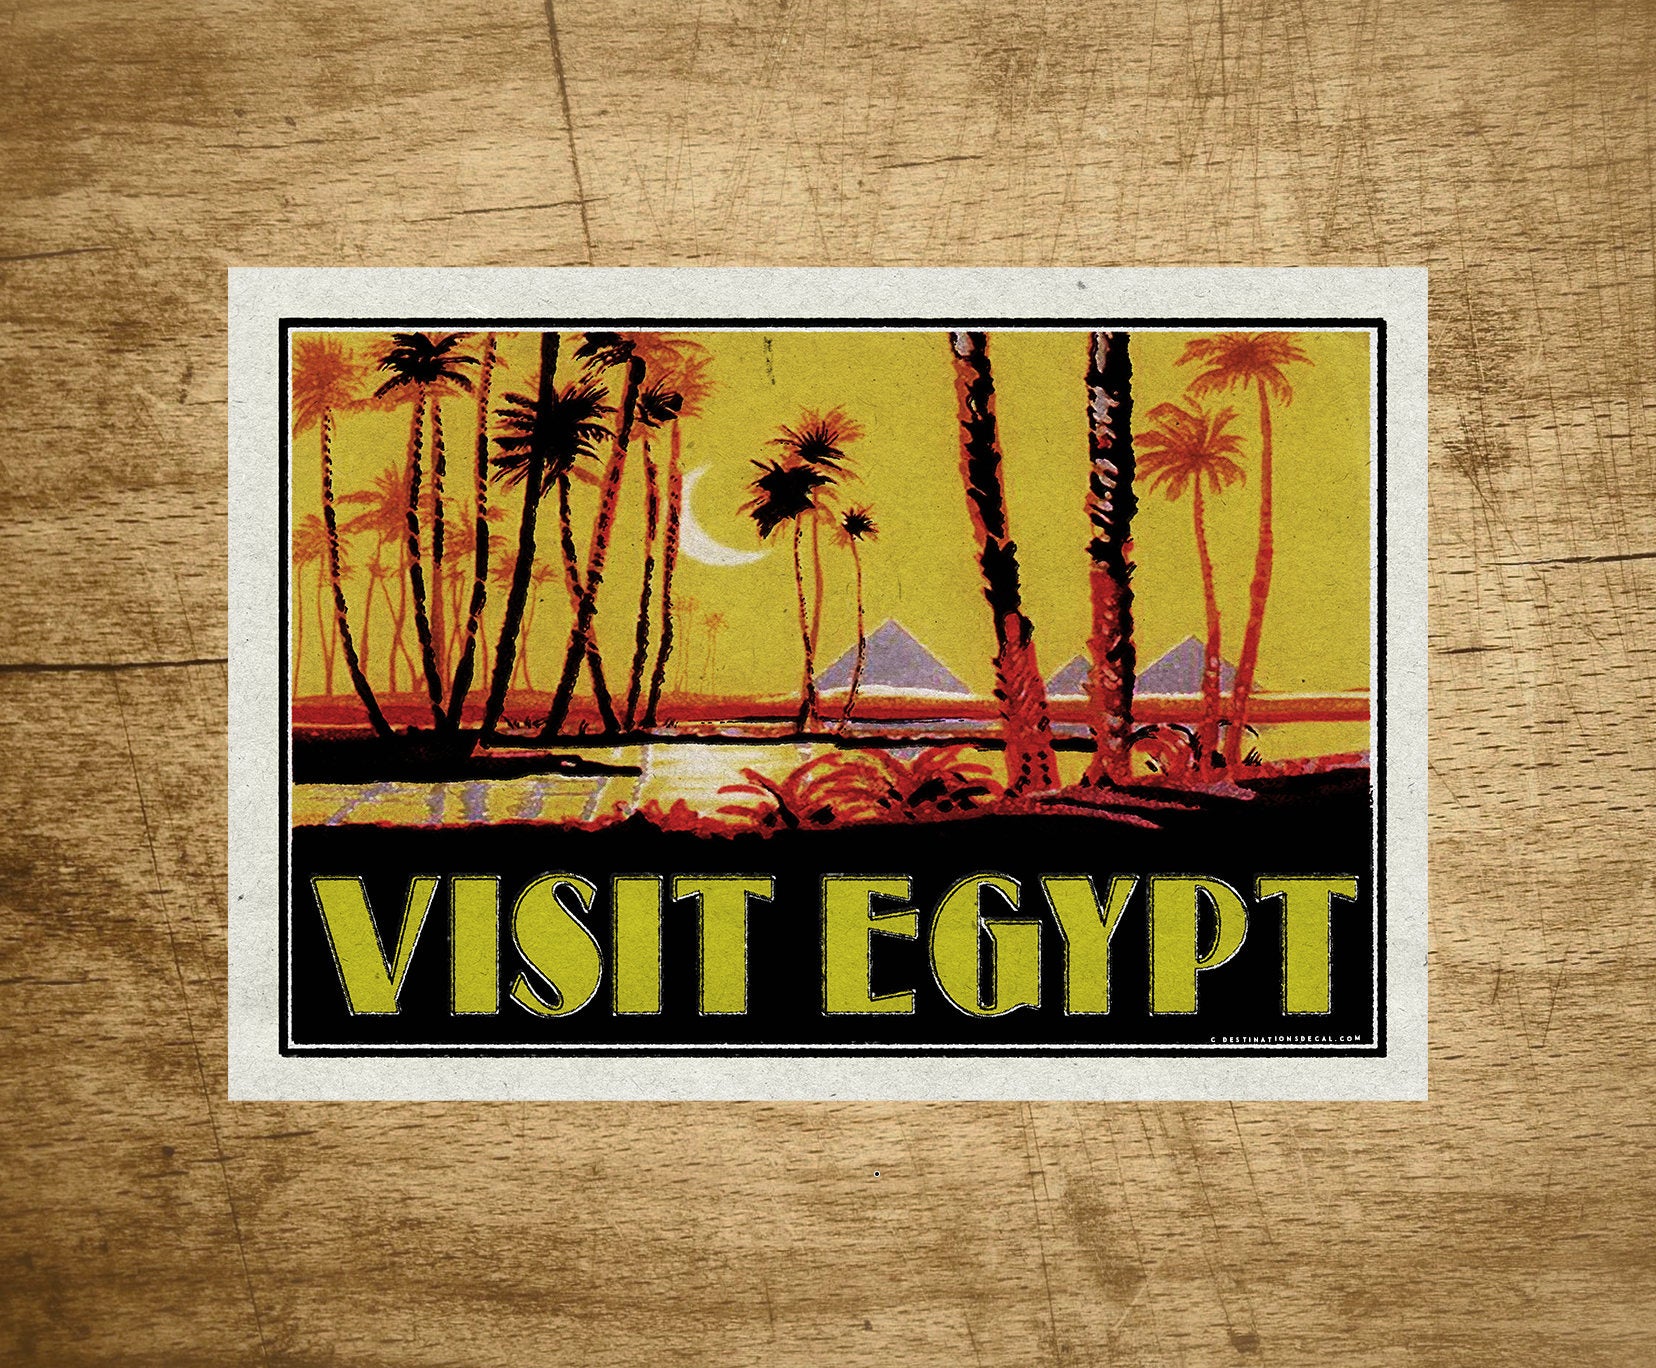 Visit Egypt Pyramids 4" x 2.8" Decal Sticker Vinyl Vintage Cairo